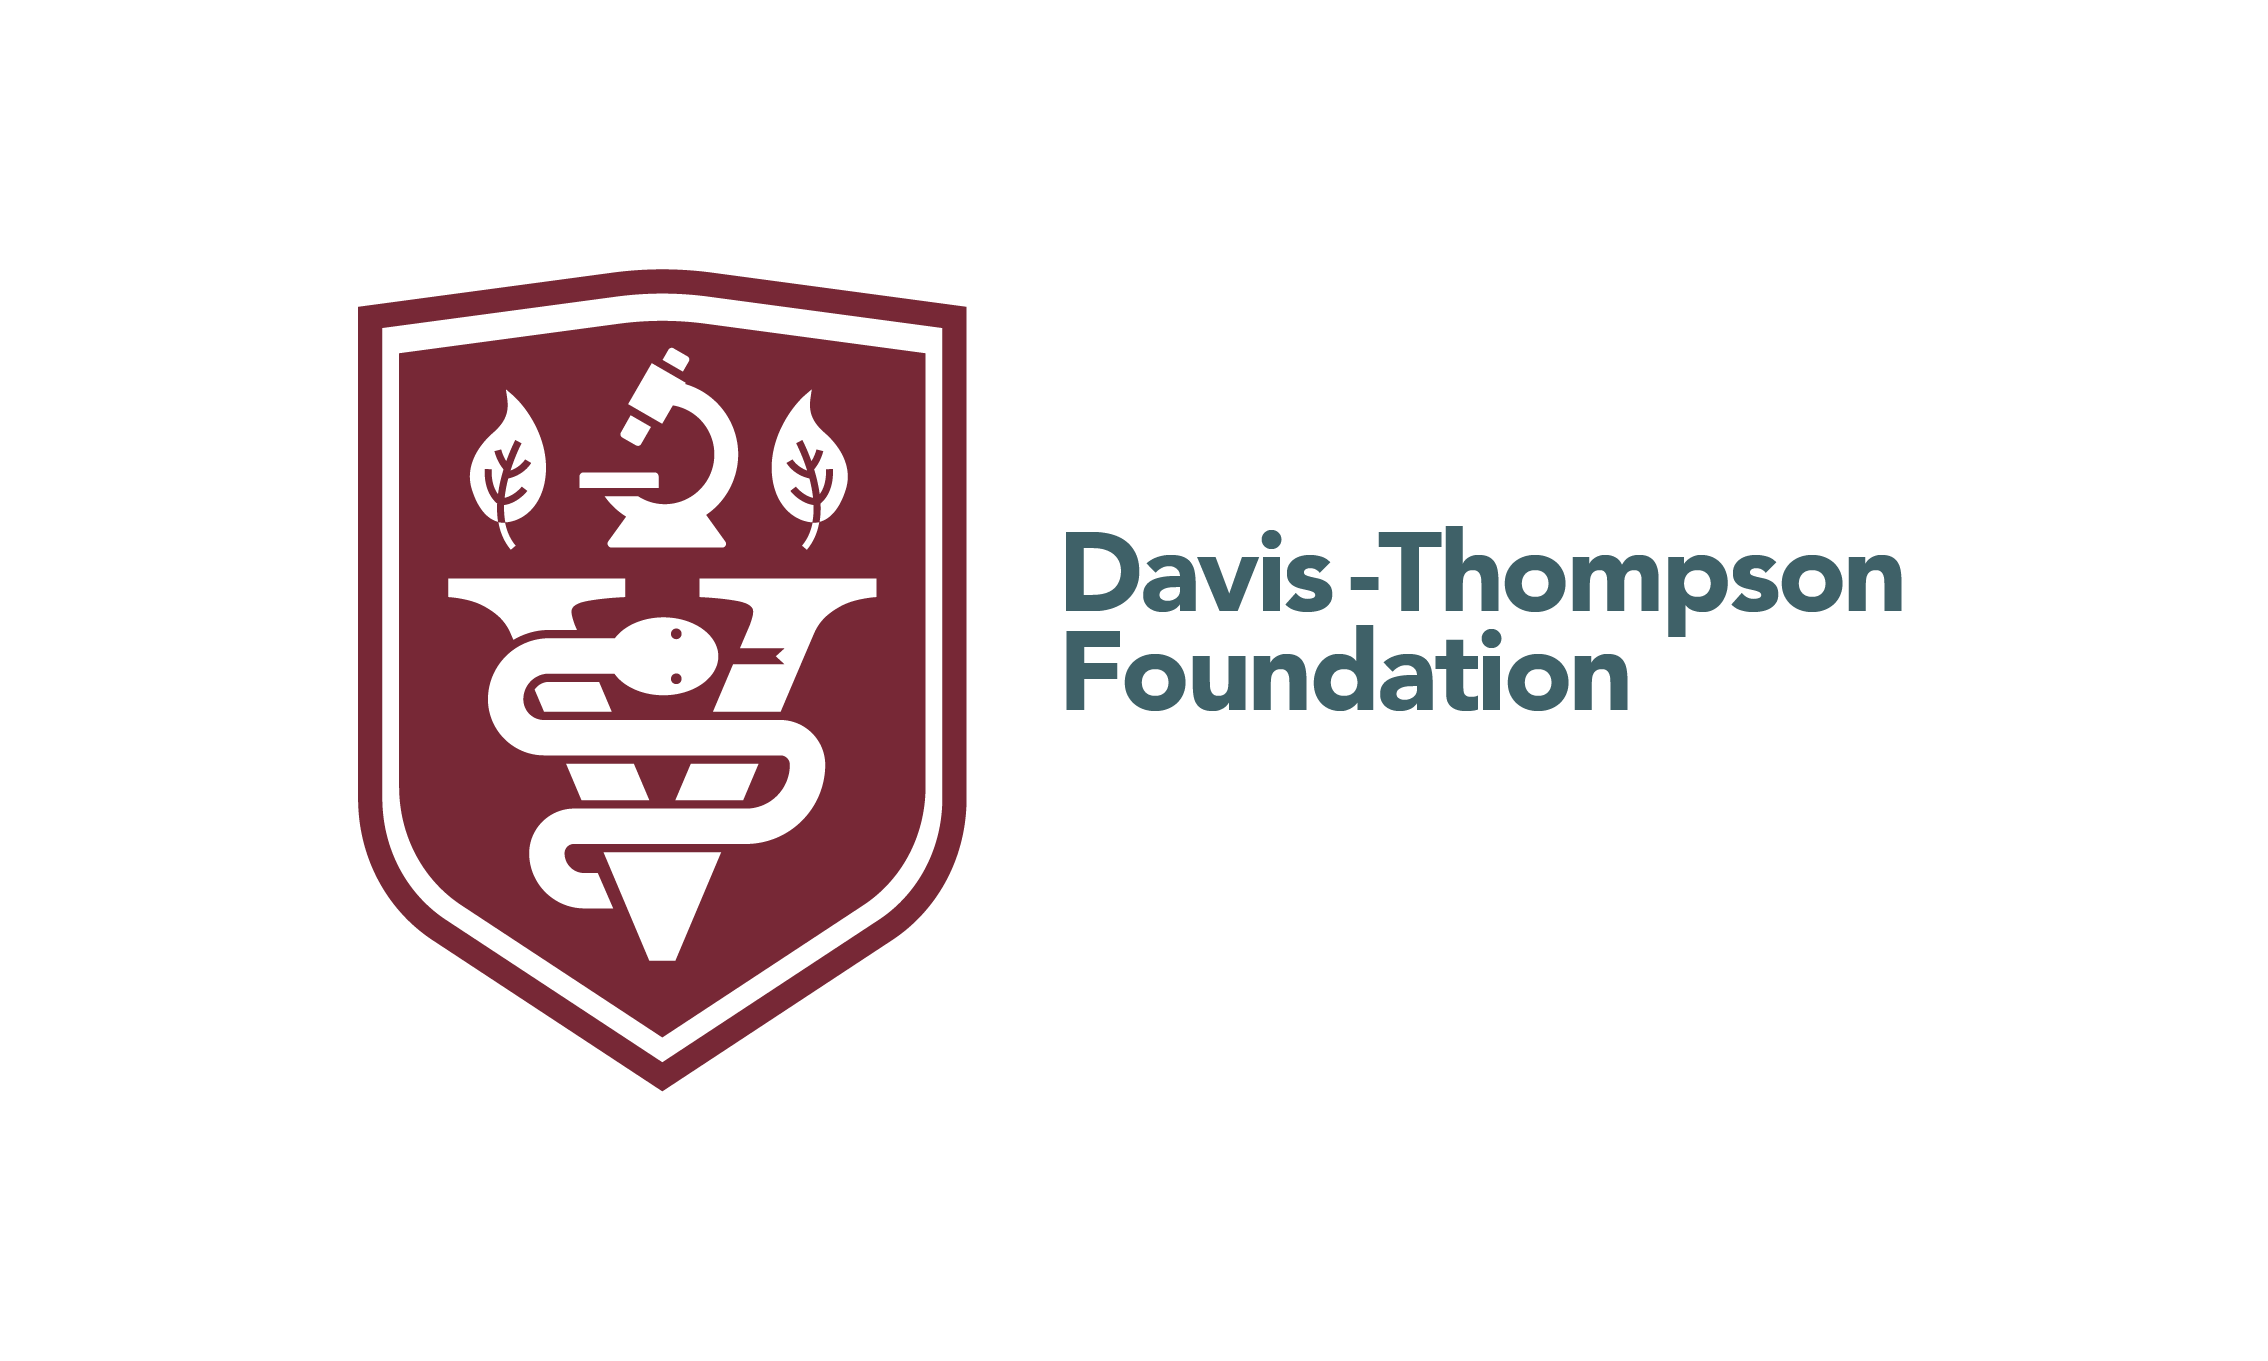 Davis-Thompson Foundation logo